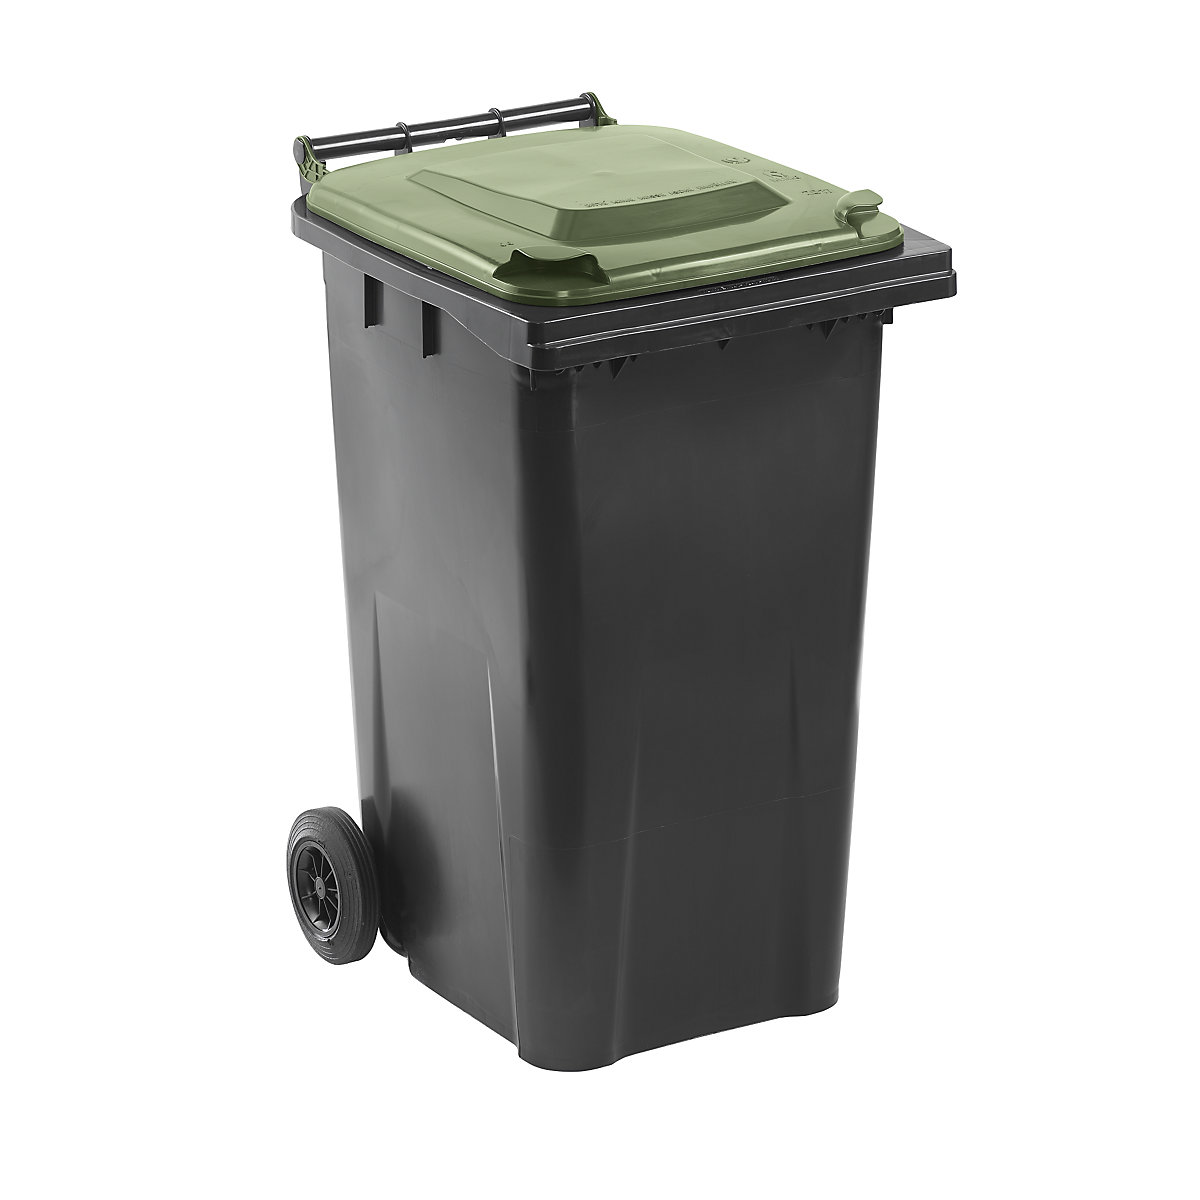 Contentor de lixo conforme a norma DIN EN 840, capacidade 240 l, LxAxP 580 x 1100 x 740 mm, antracite, tampa verde